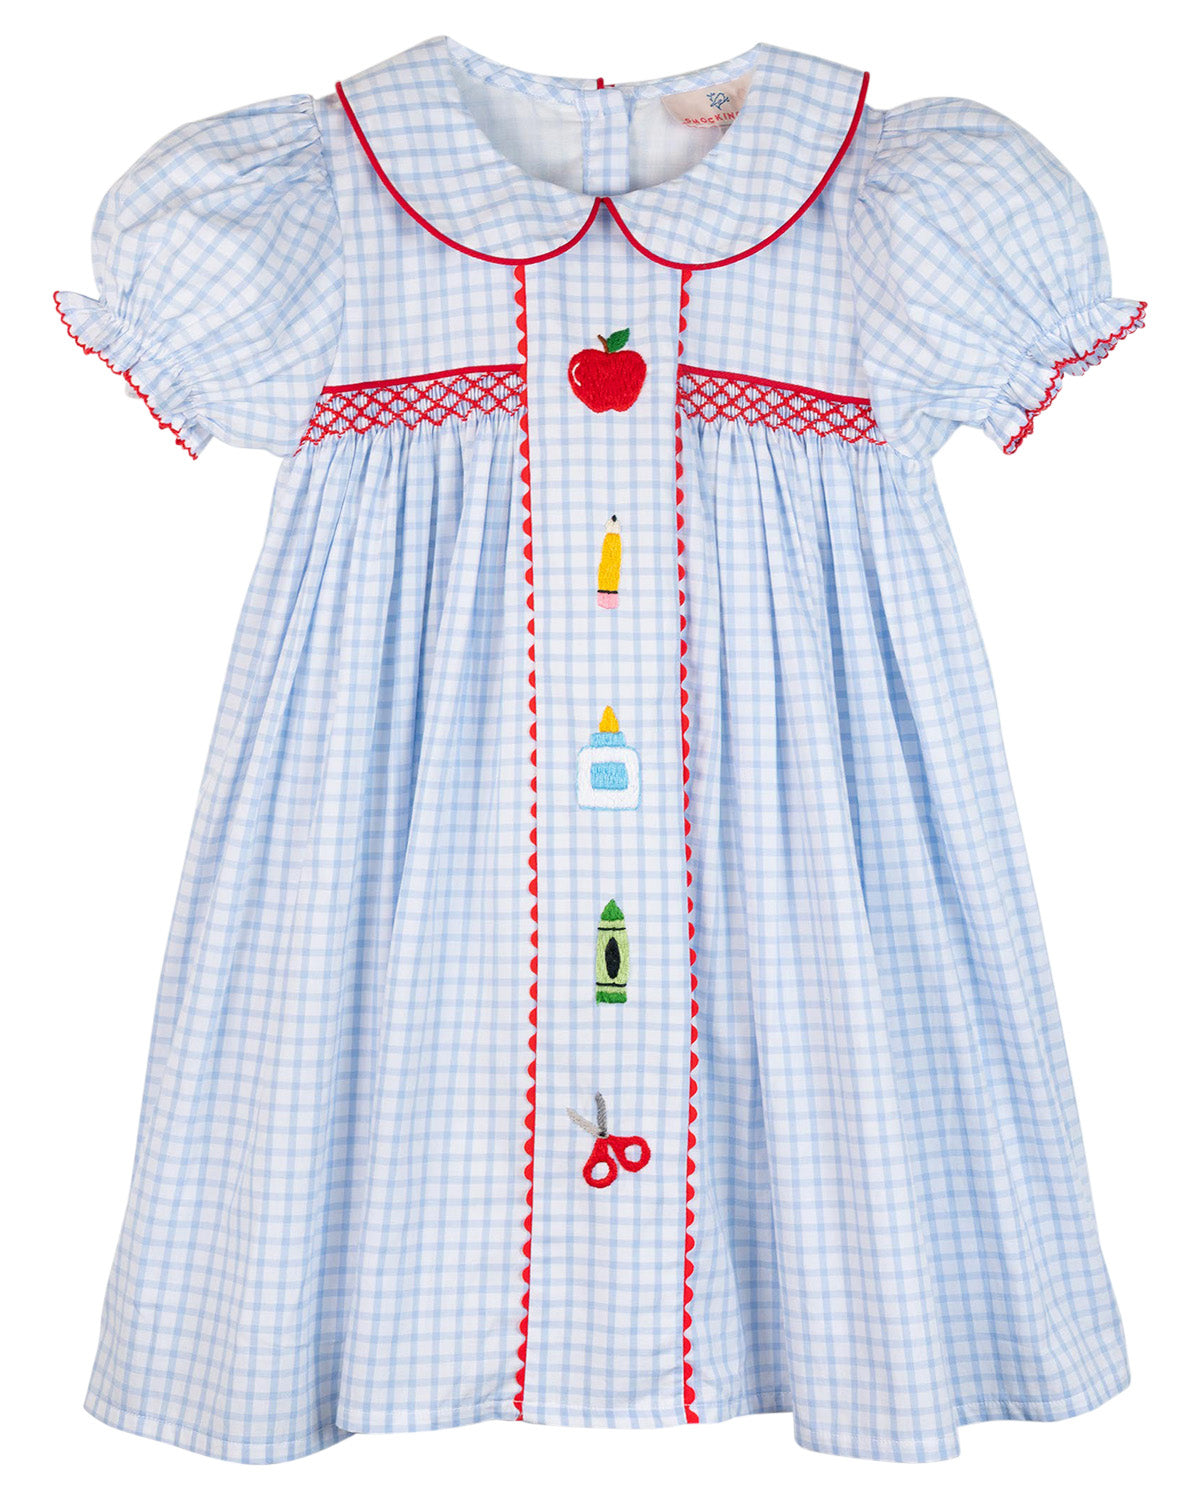 School Supplies Embroidered Dress